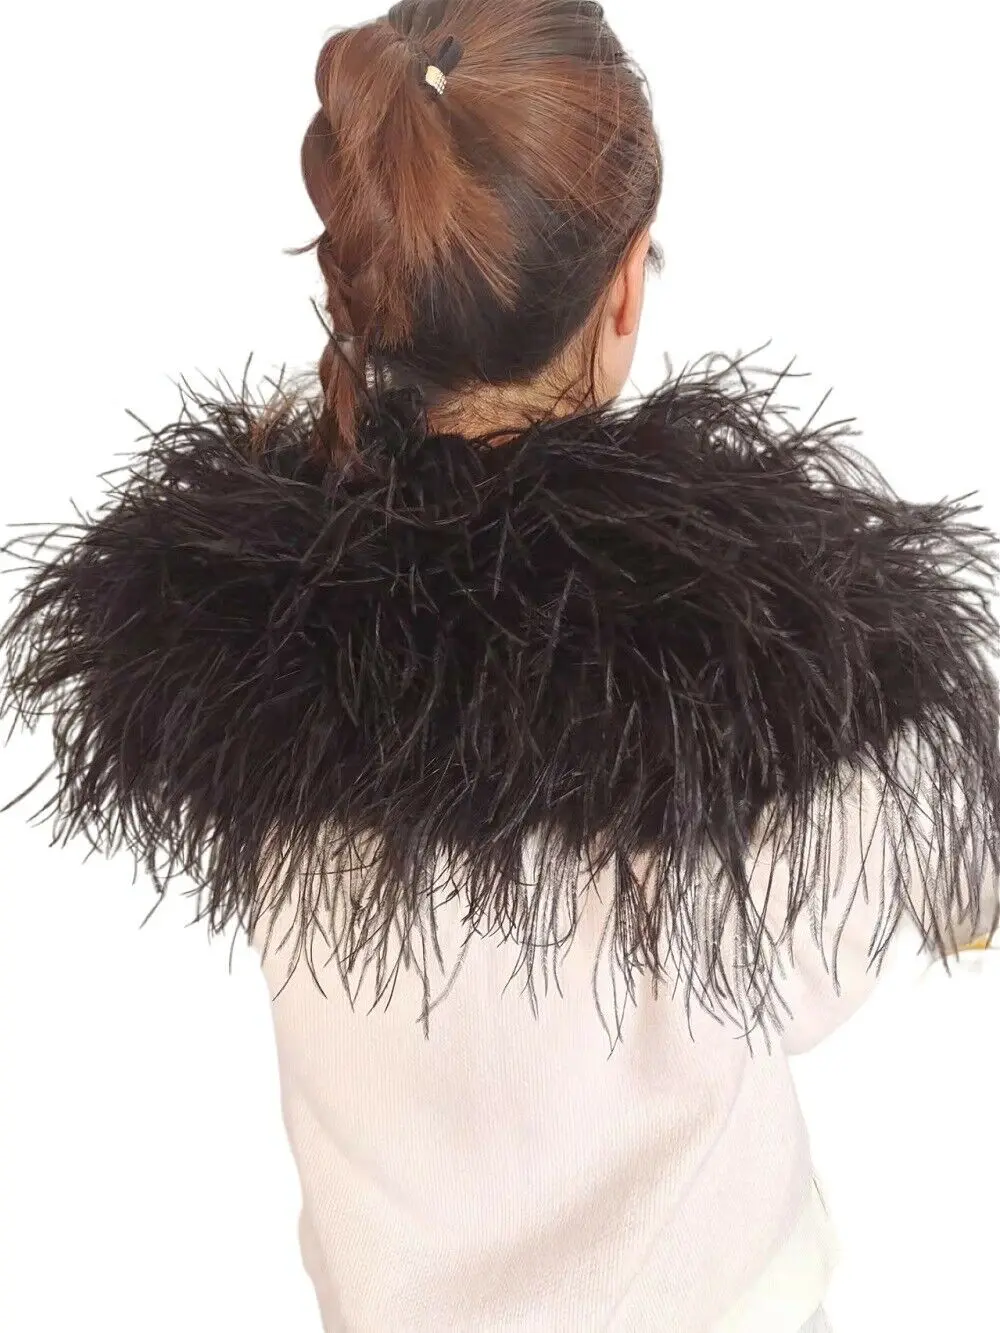 Real Ostrich Feather Fur Shrug Shawl Bride Wedding Party Accessories Handmade